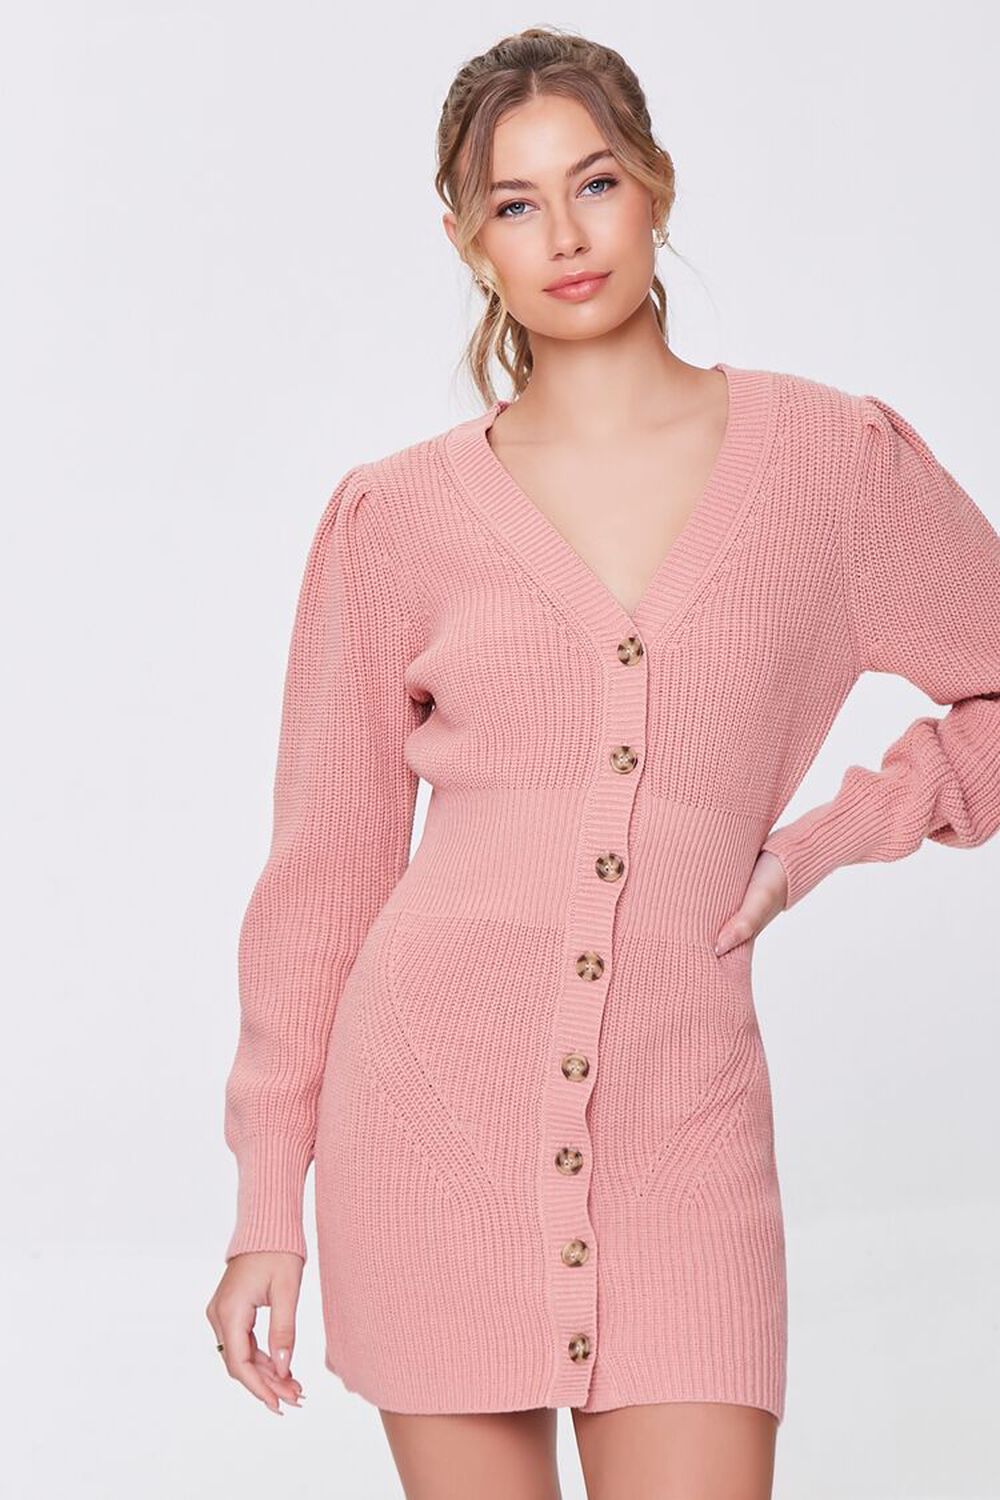 PINK Ribbed Cardigan Sweater Dress, image 1